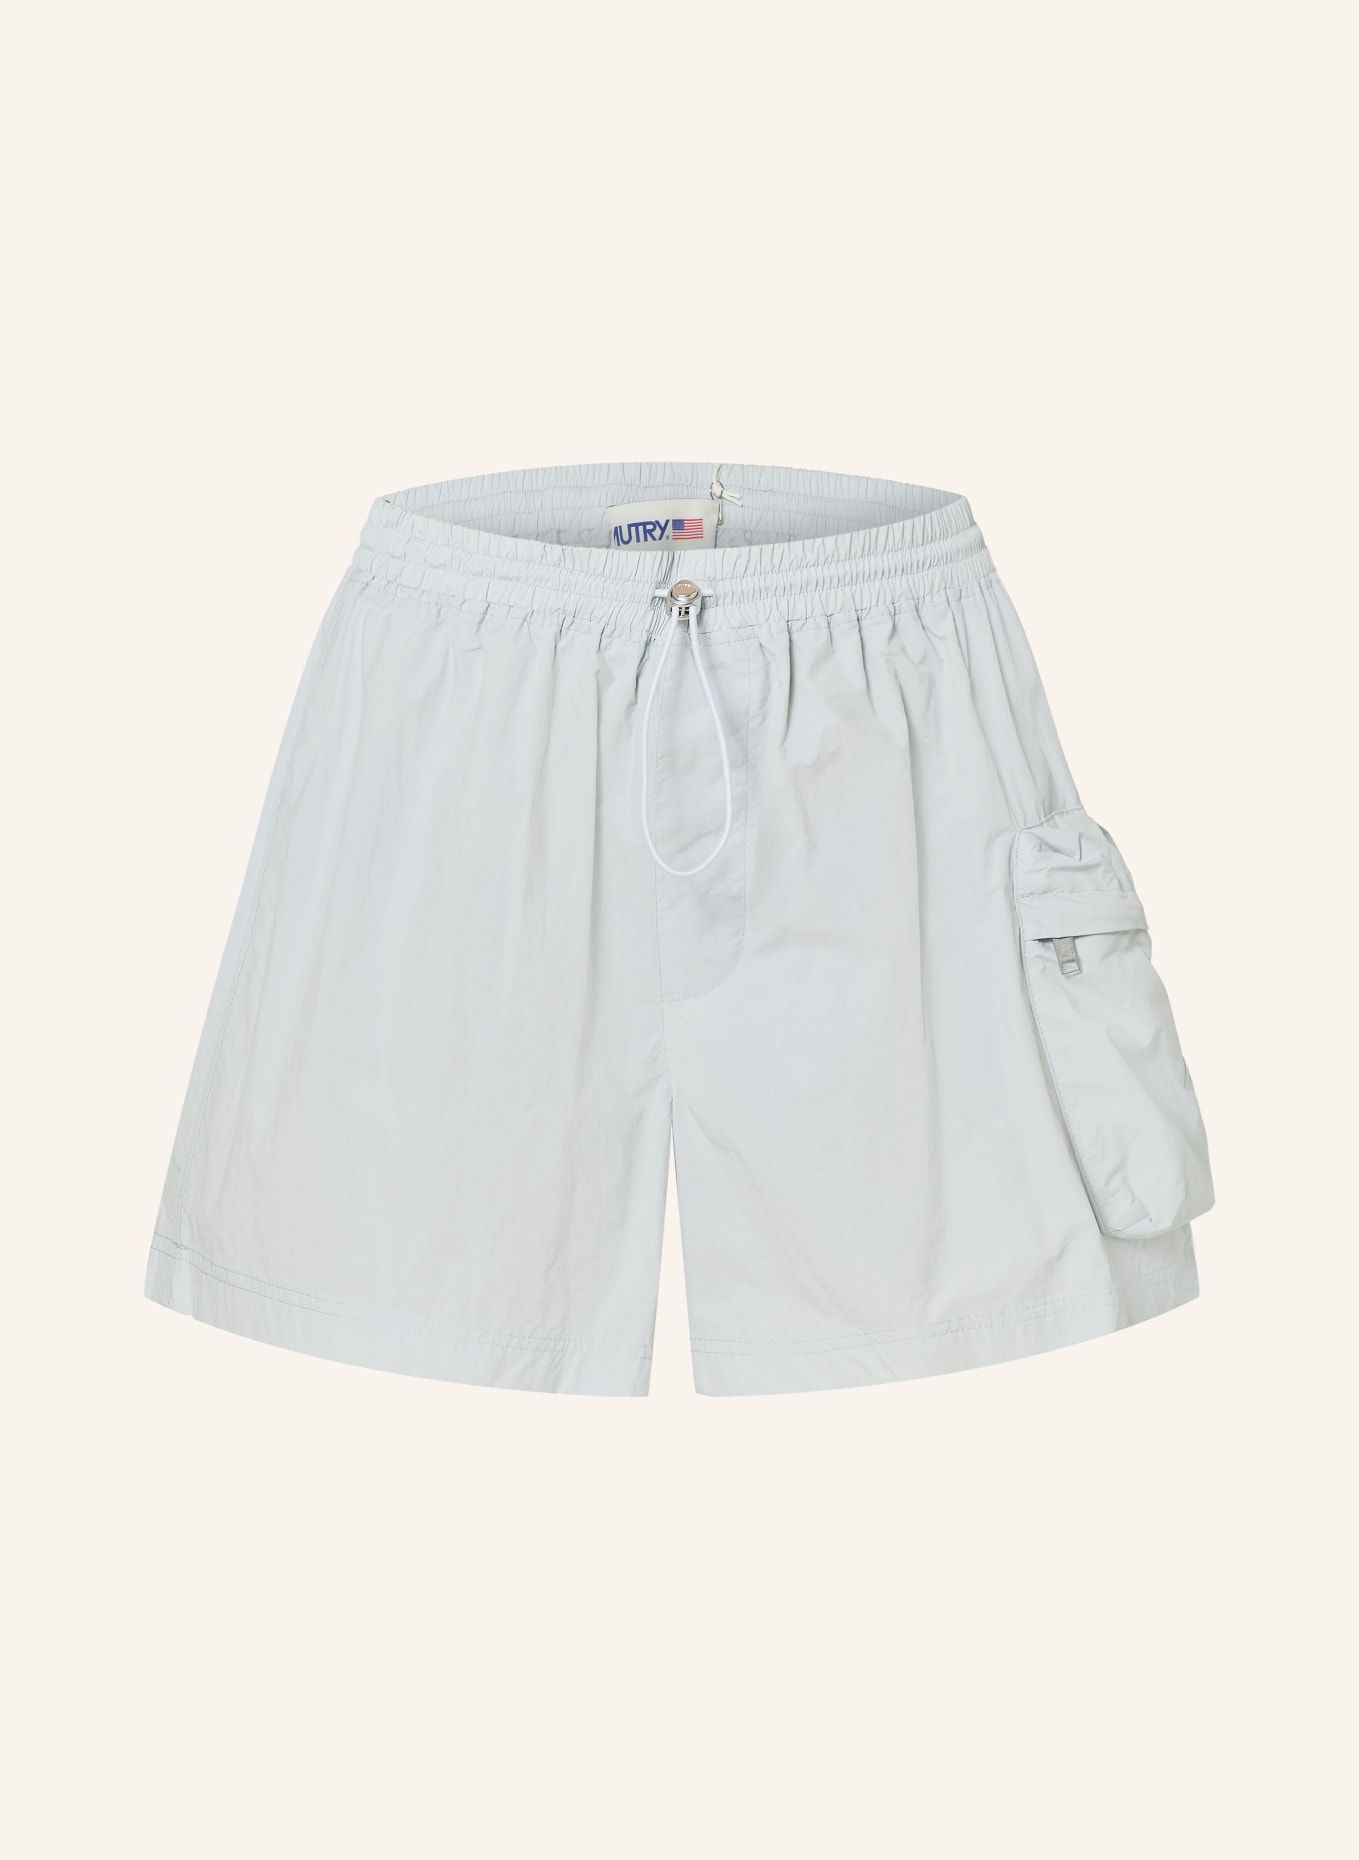 AUTRY Shorts, Farbe: HELLBLAU (Bild 1)